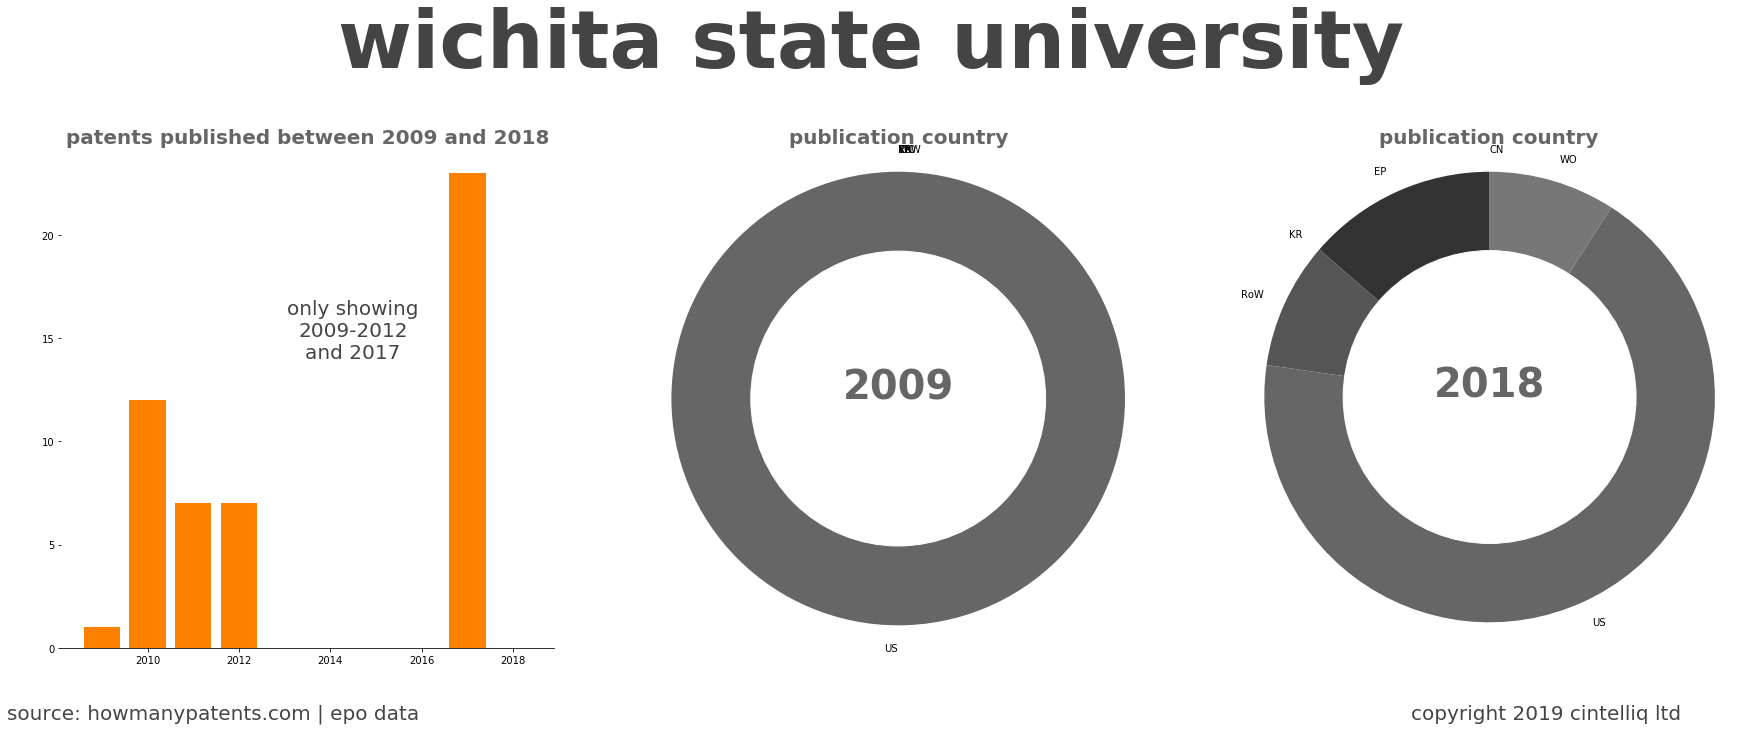 summary of patents for Wichita State University